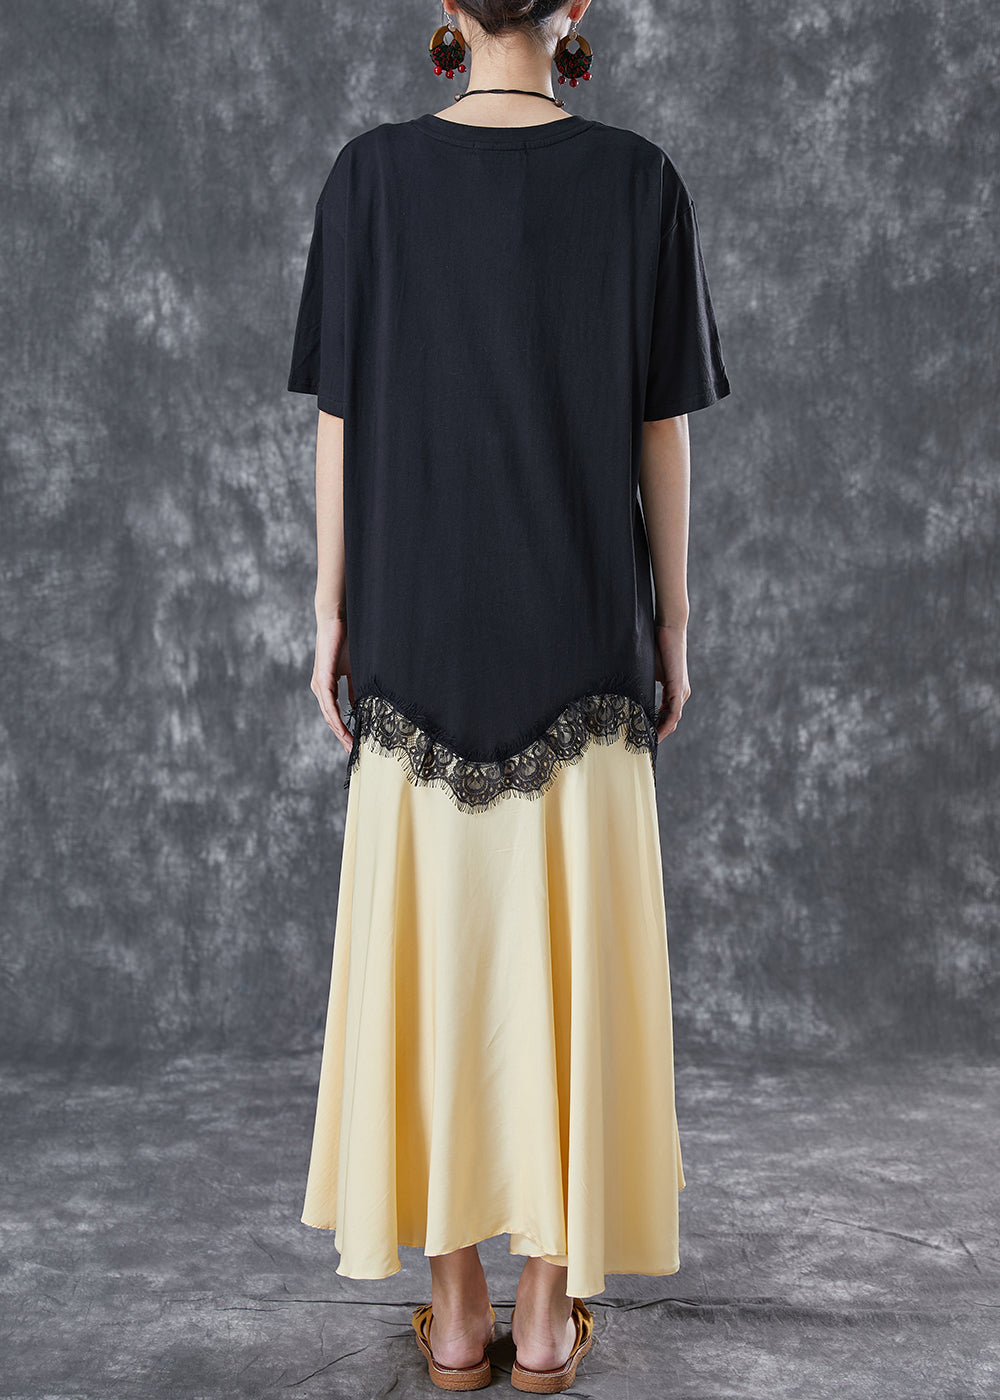 Plus Size Black Asymmetrical Patchwork Cotton Fake Two Piece Dresses Summer TA1055